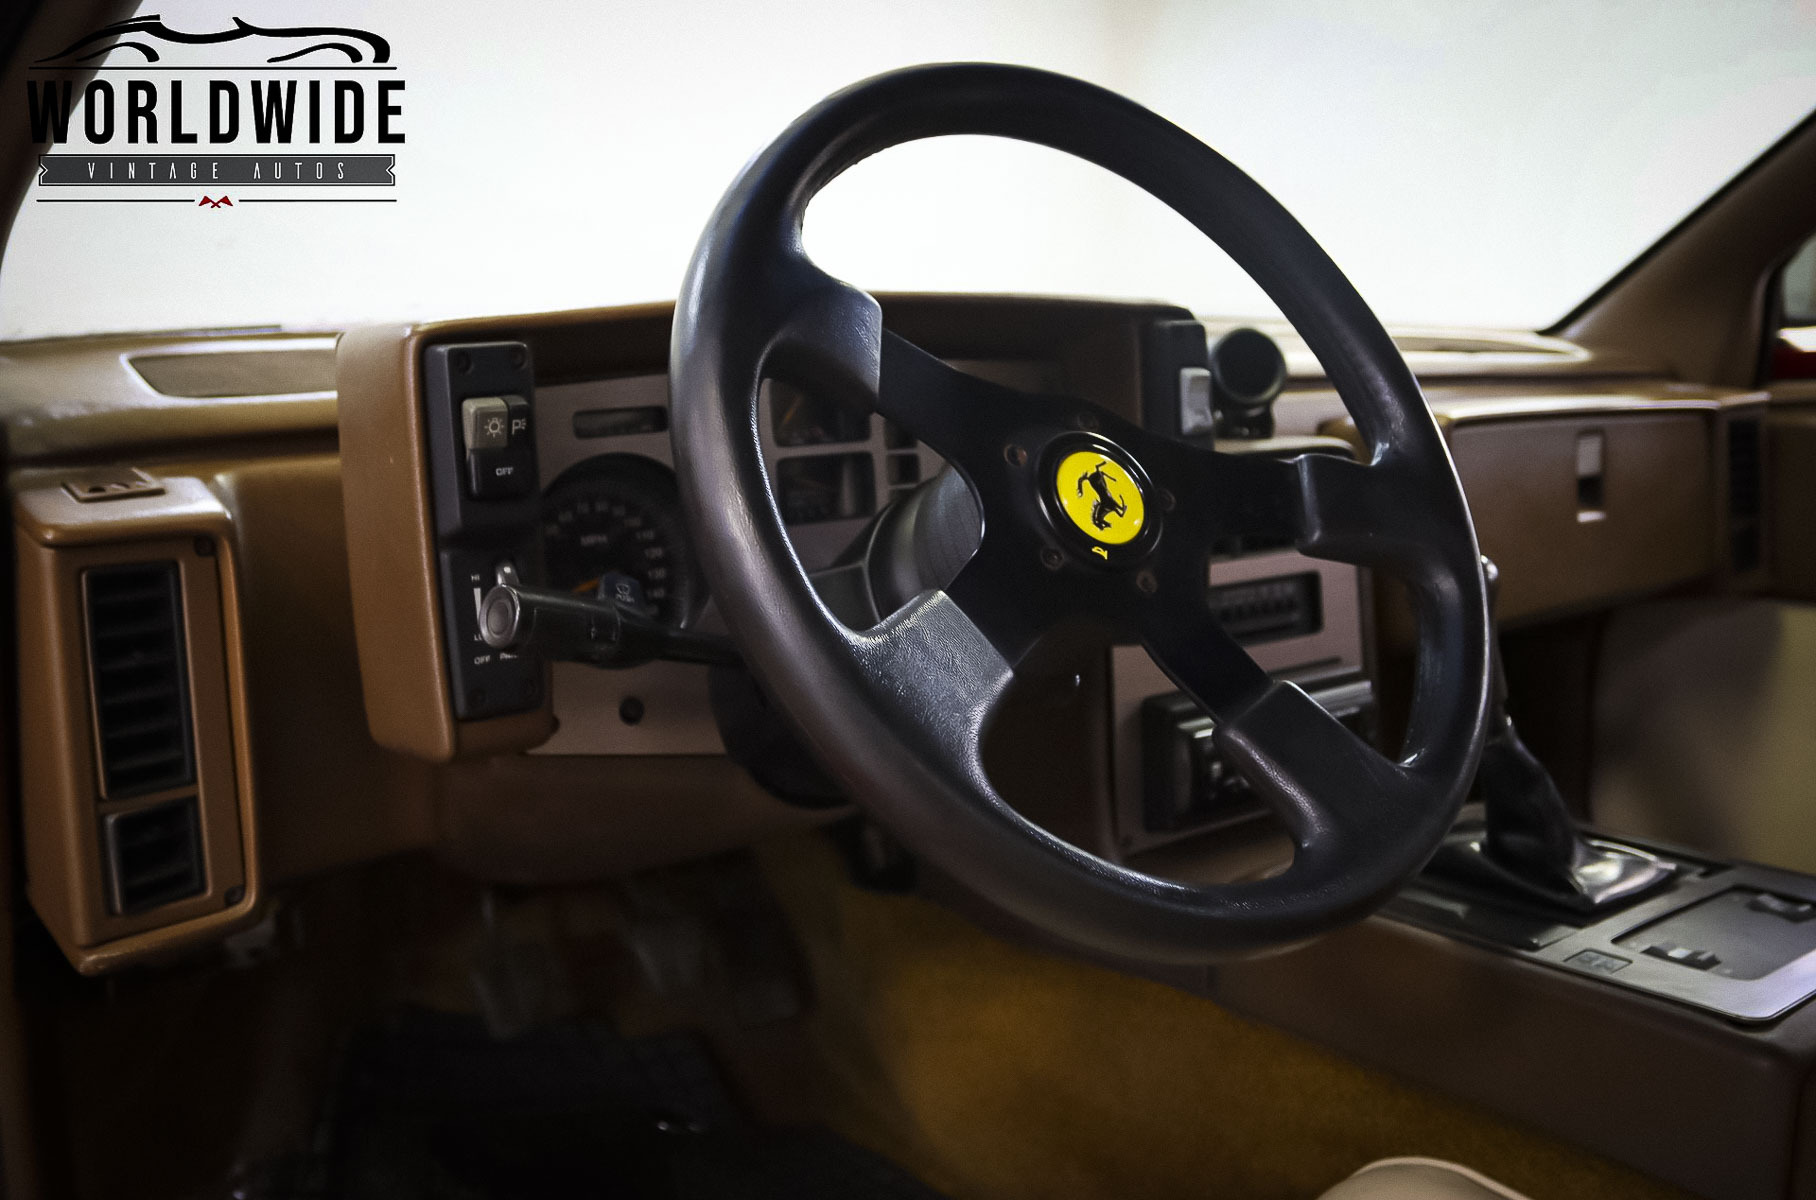 Реплику Ferrari F40 на базе Pontiac продают за 1,8 миллиона рублей